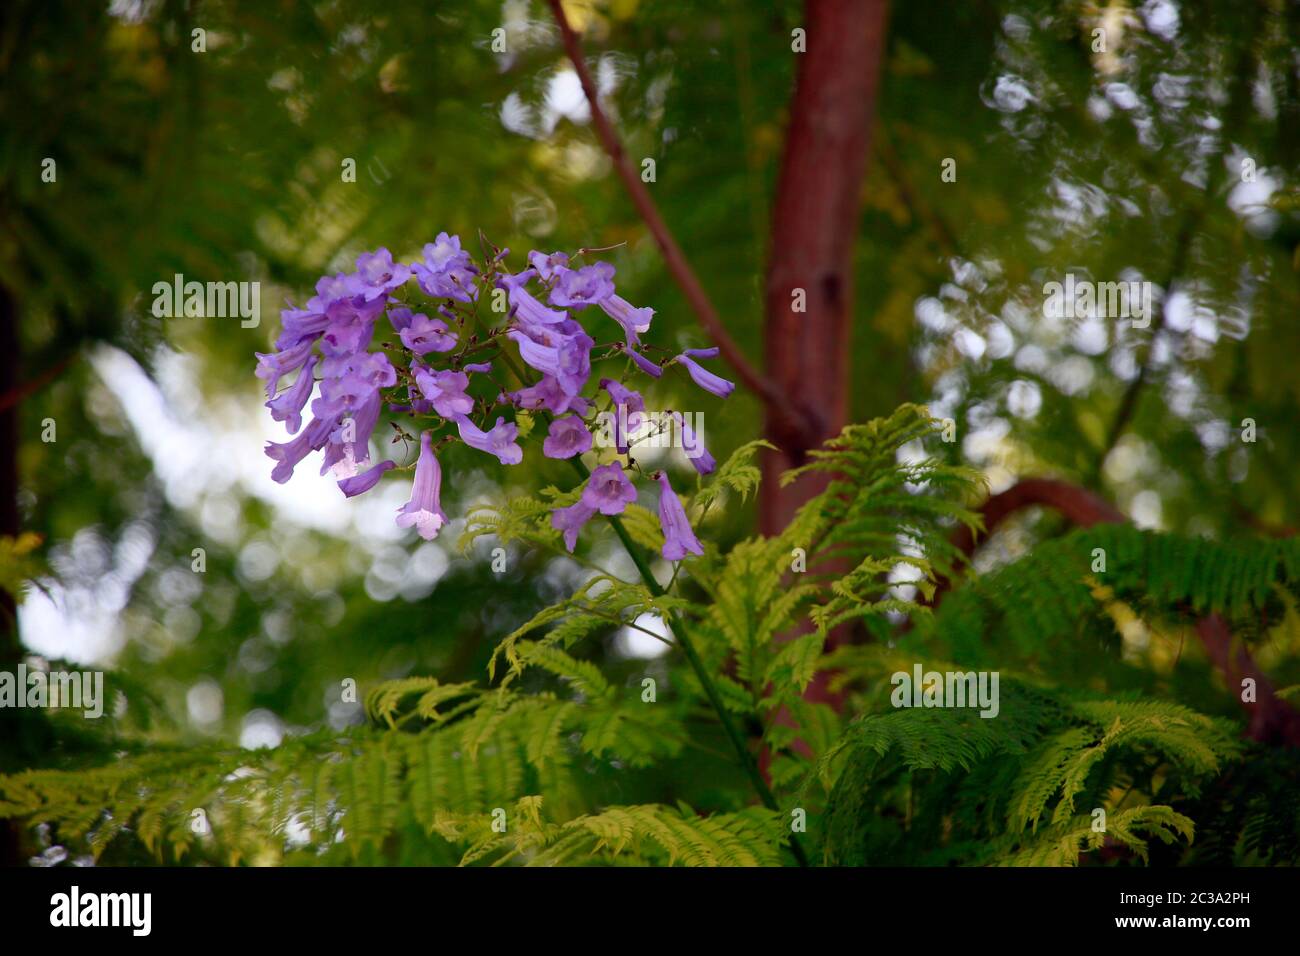 Palisanderholzbaum (Jacaranda mimosifolia), Kyrenia/Girne, Türkische Republik Nordzypern Foto Stock